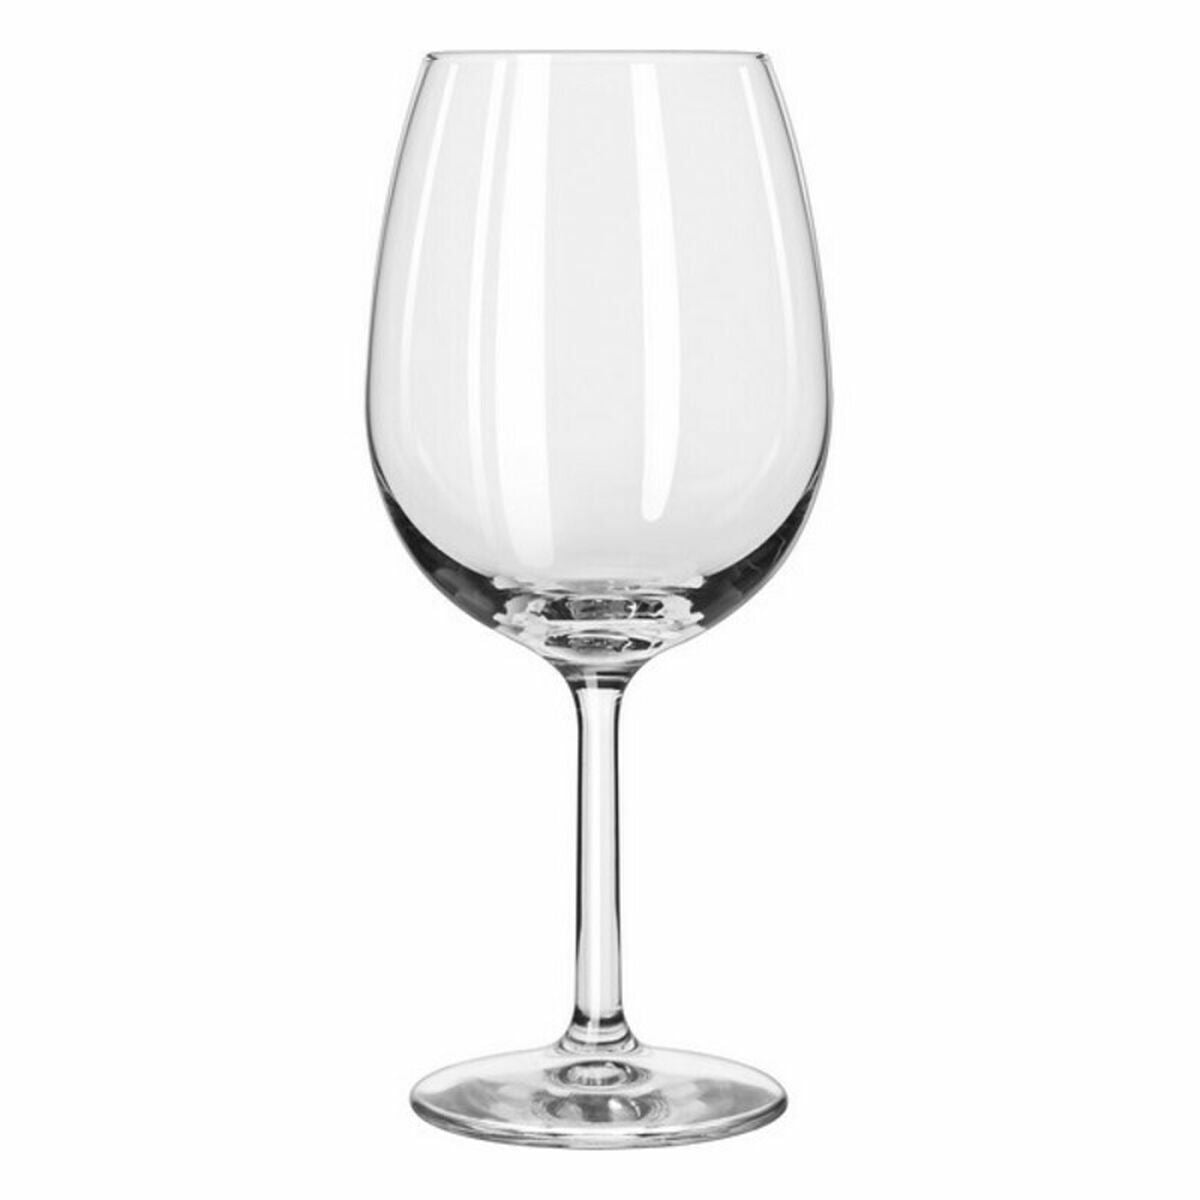 Weinglas Royal Leerdam 63242 (6 Stück) (1 pcs)